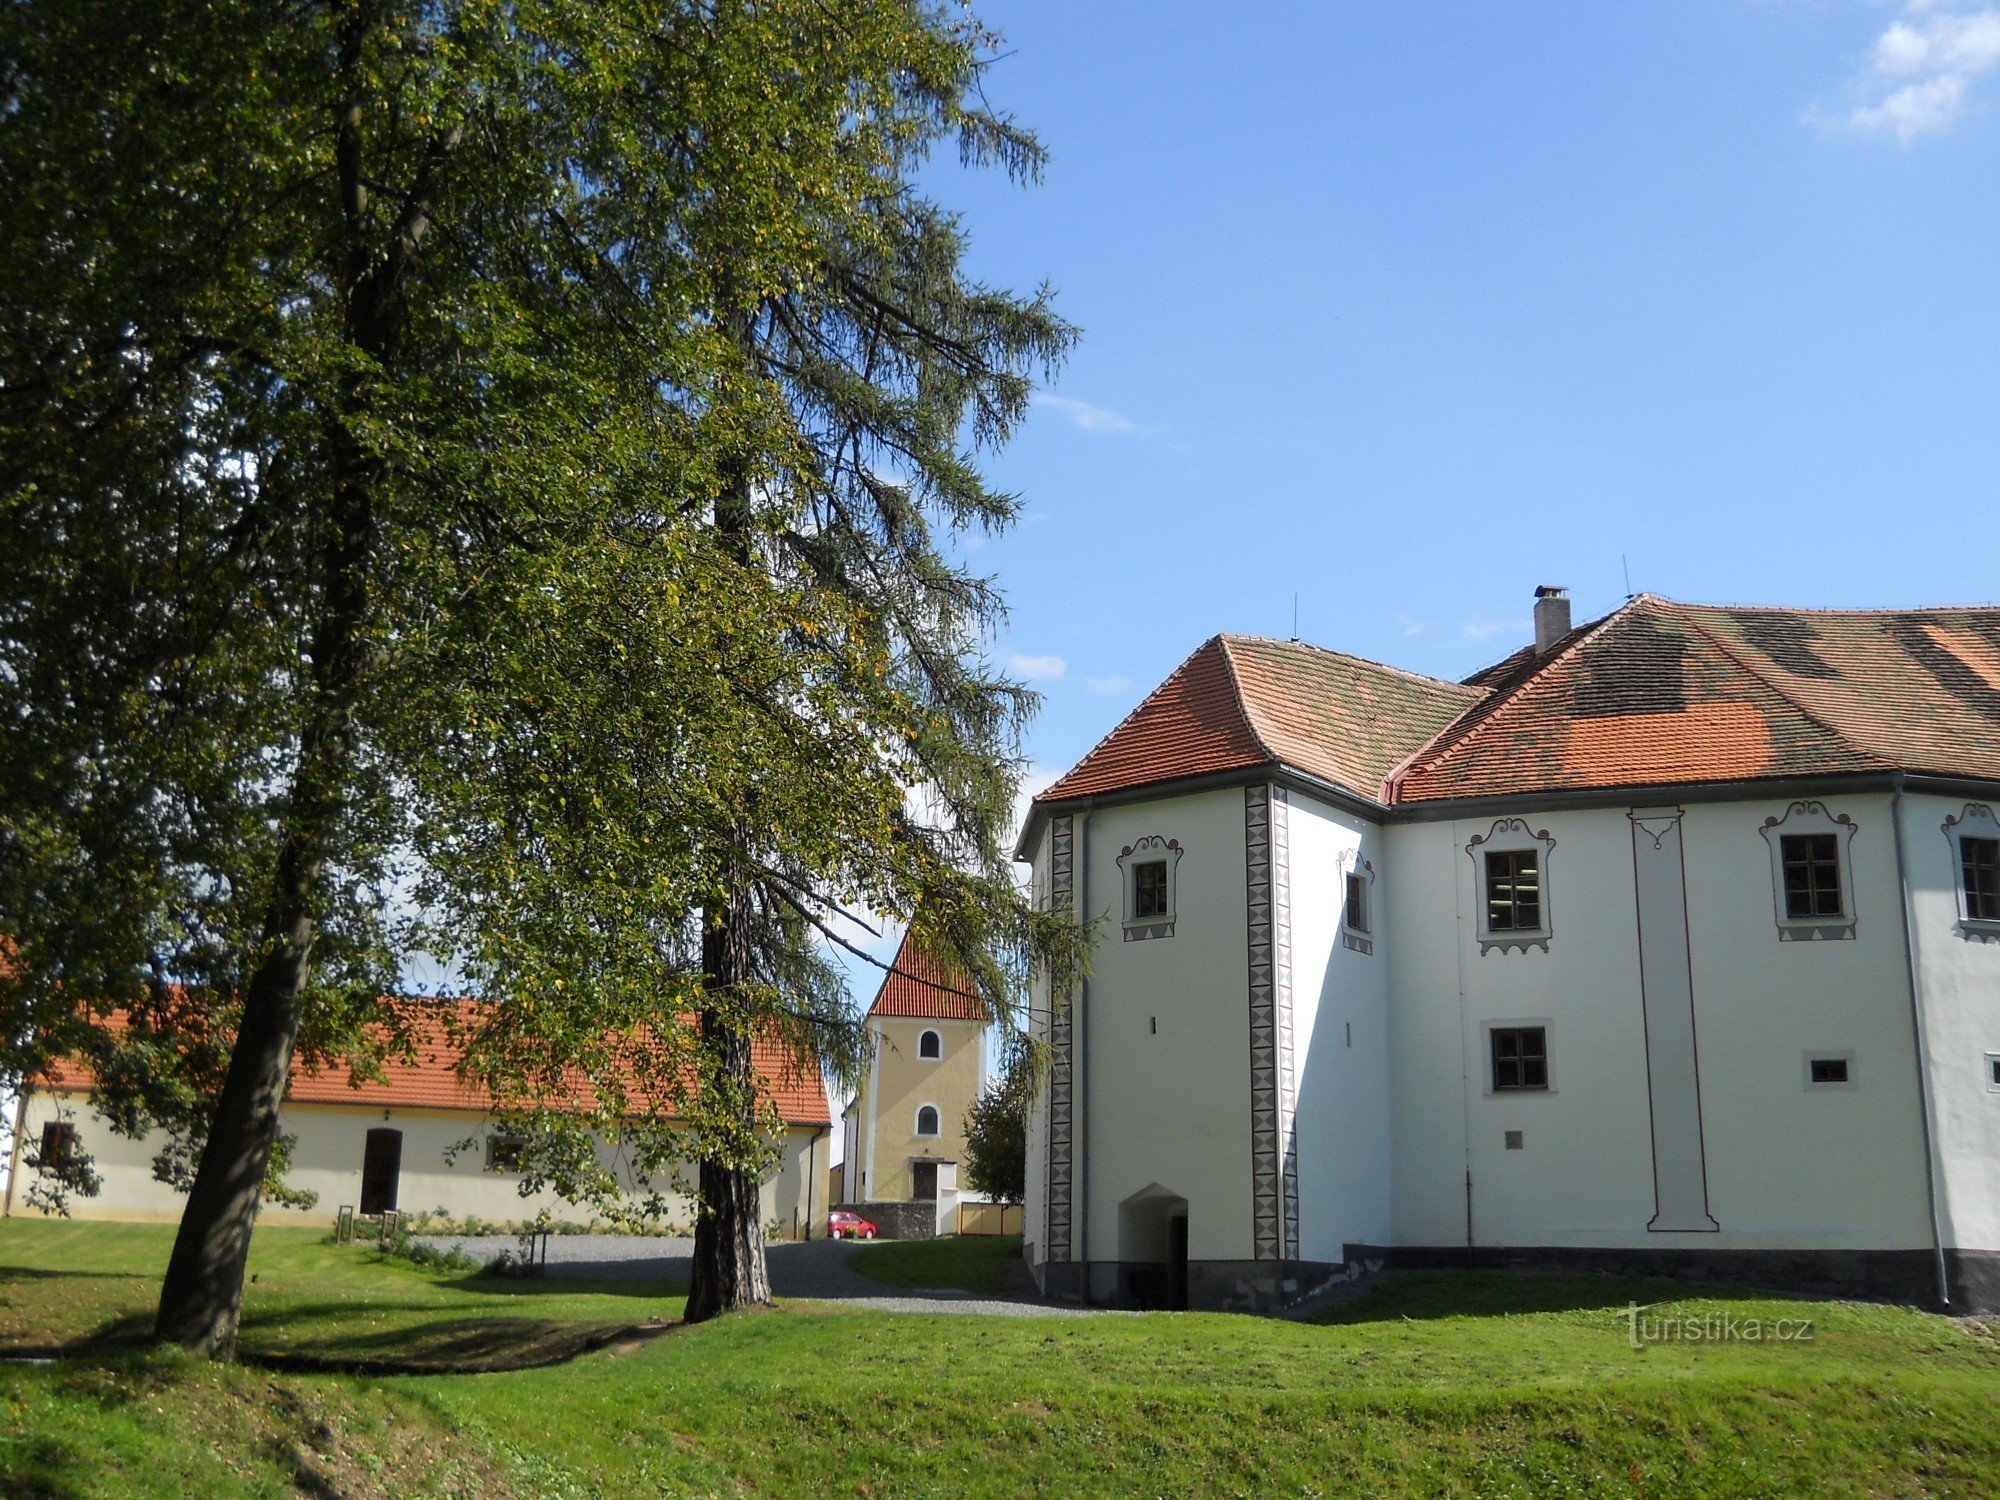 Castelo de Chanovice